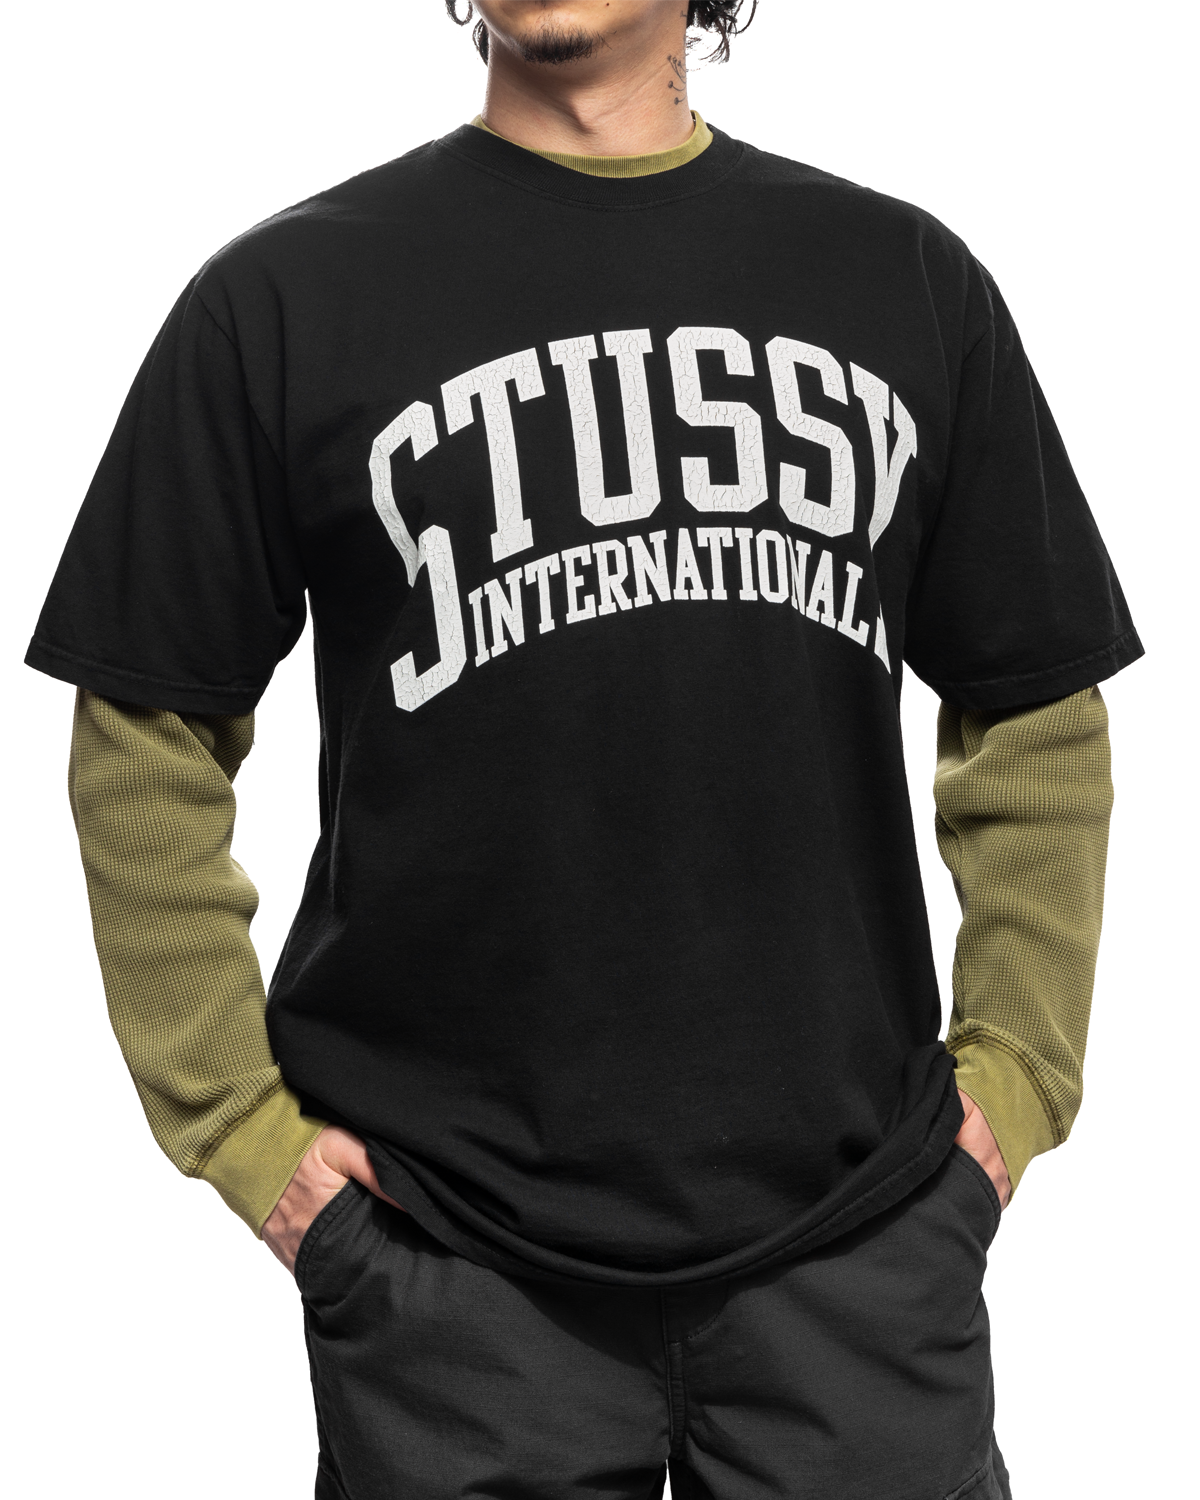 Stussy International Pigment Dyed Black